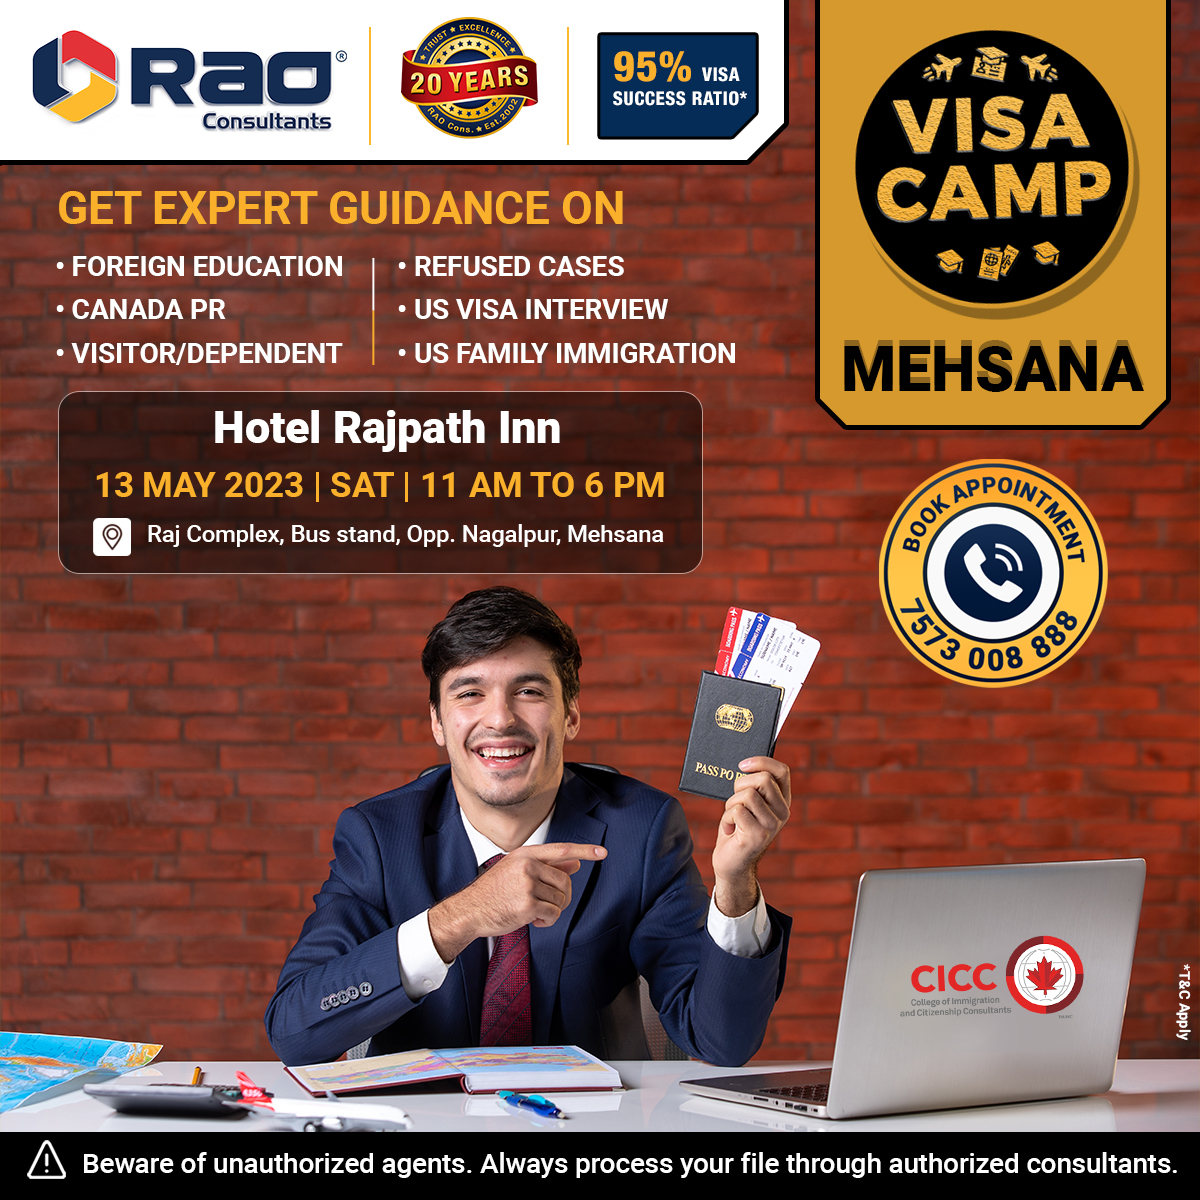 Rao Consultants Visa Camp at Mehsana, Mehsana, Gujarat, India